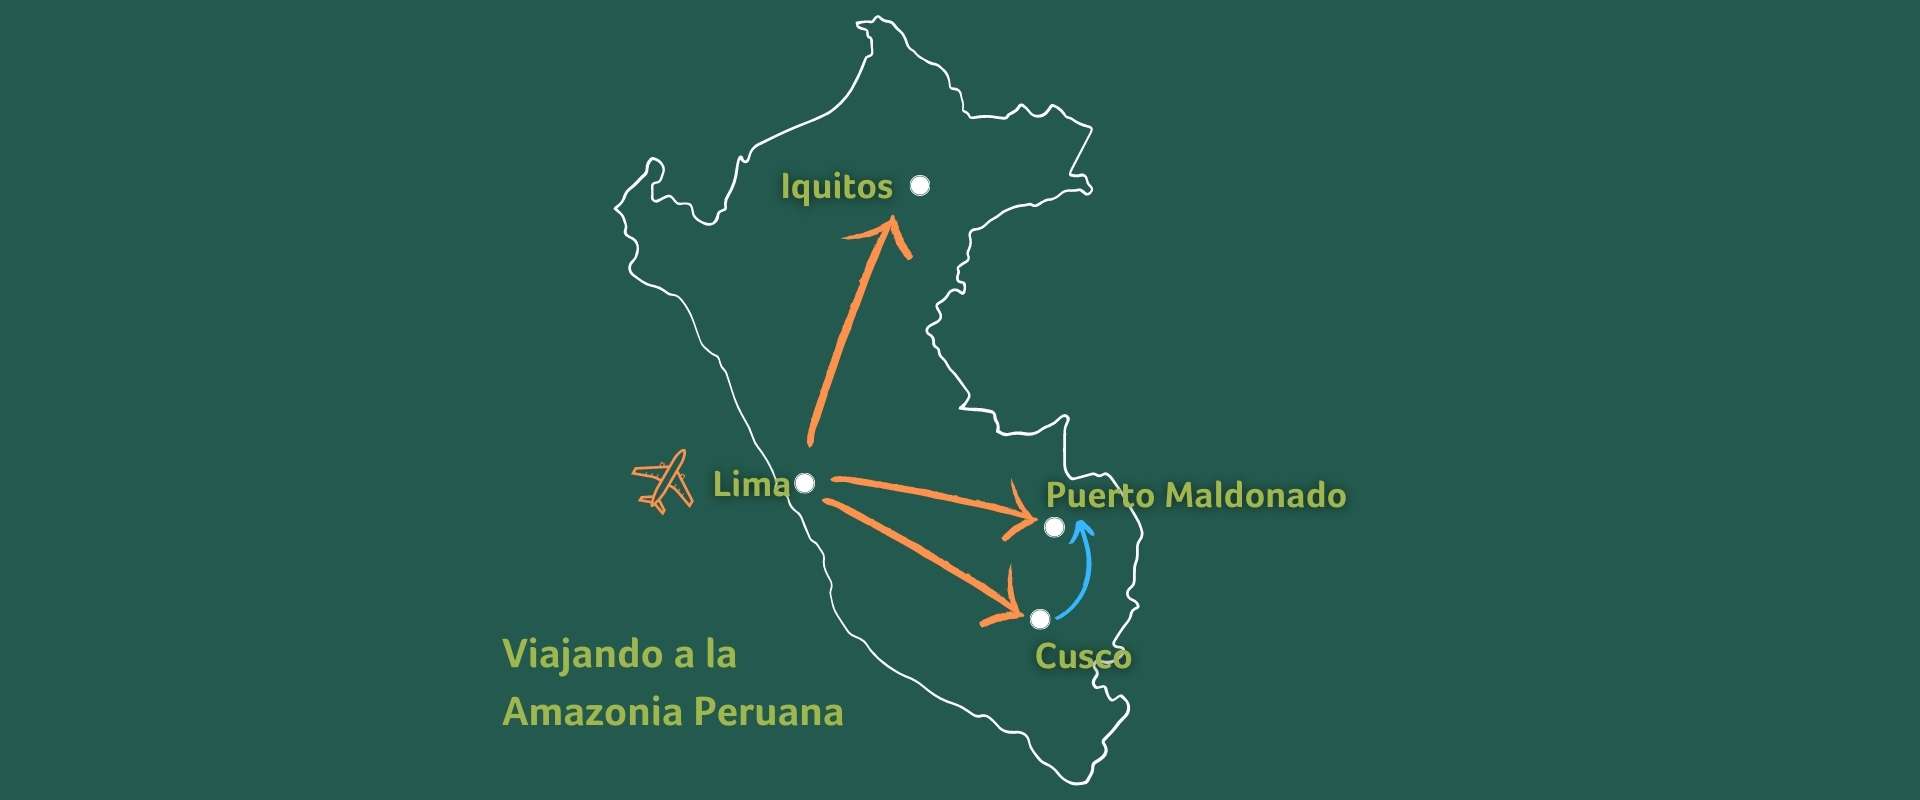 Viajando a la Amazonia Peruana